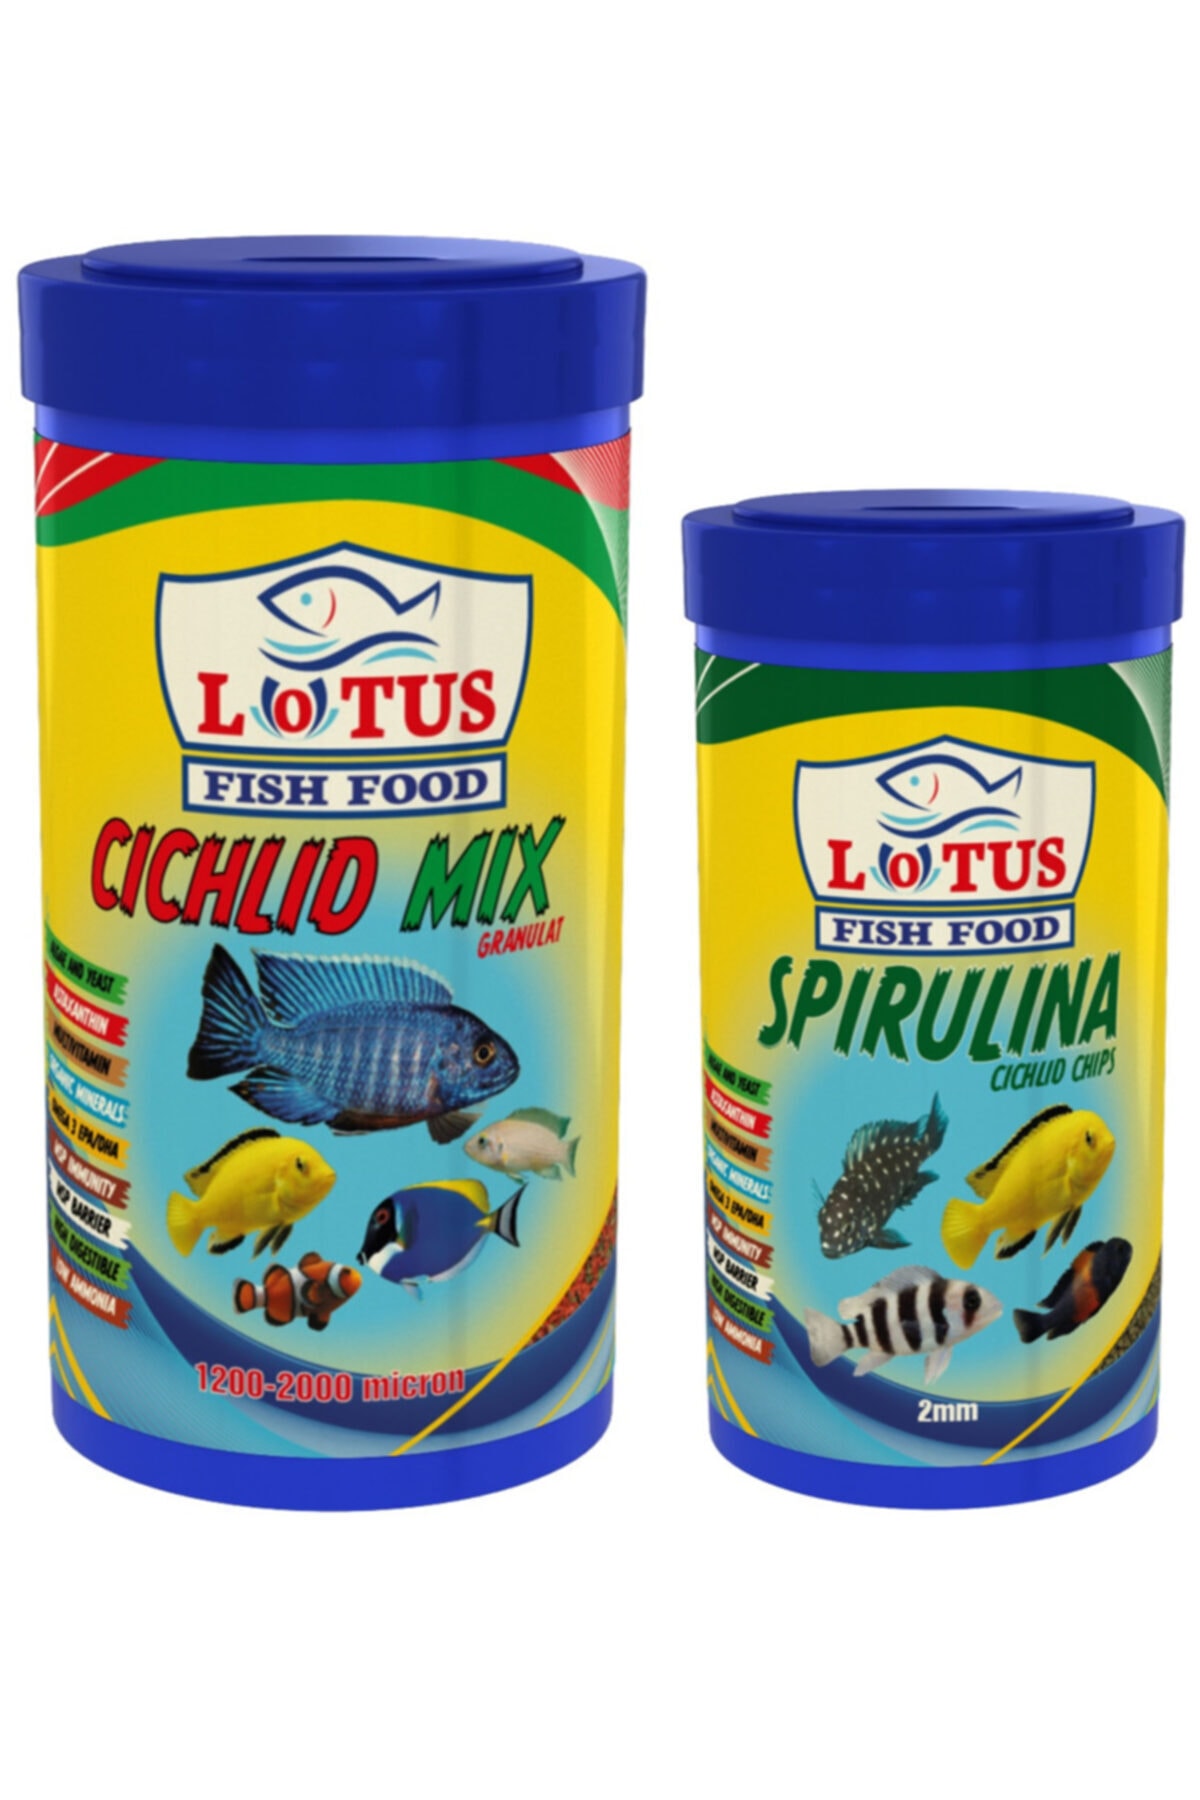 Cichlid Mix Granulat 1000 ml ve Spirulina Cichlid Chips 250 ml Balık Yemi fotograf